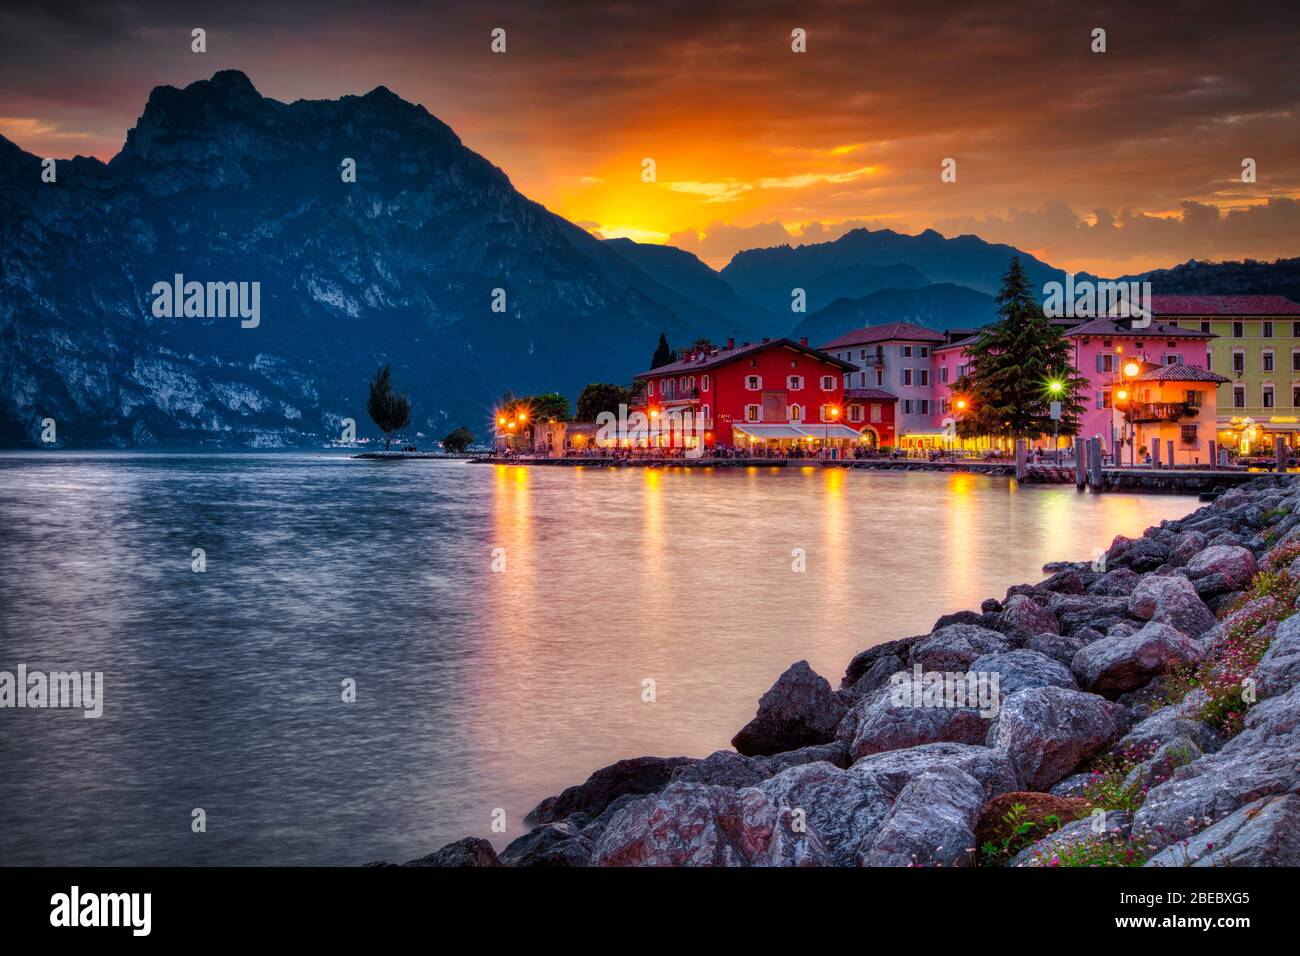 Popular travel destination, the Torbole promenade on Lake Garda at dusk, Trento, Italy Stock Photo